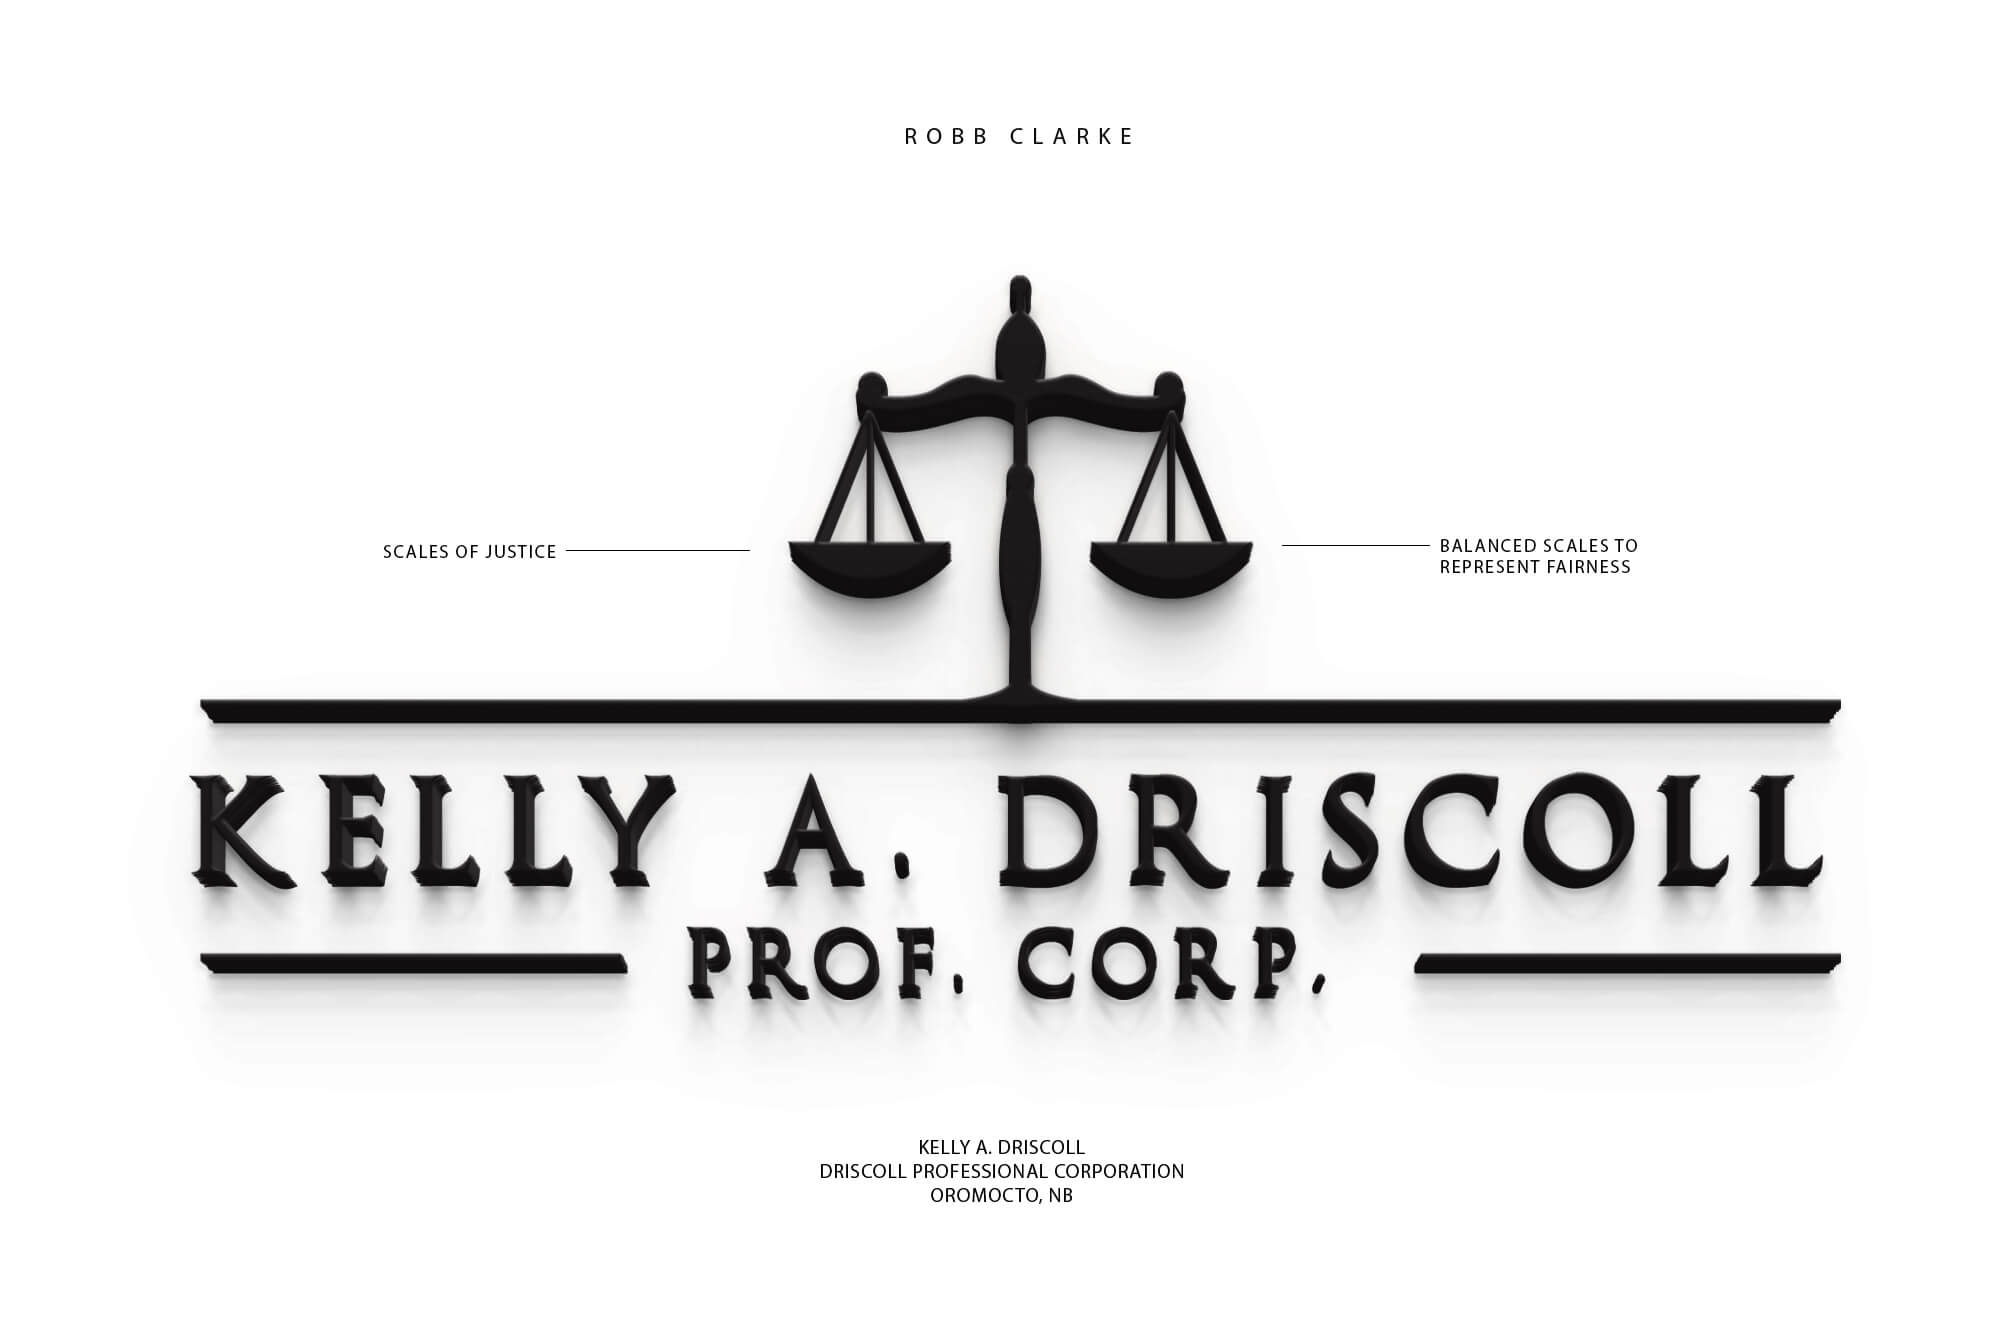 Kelly A. Driscoll